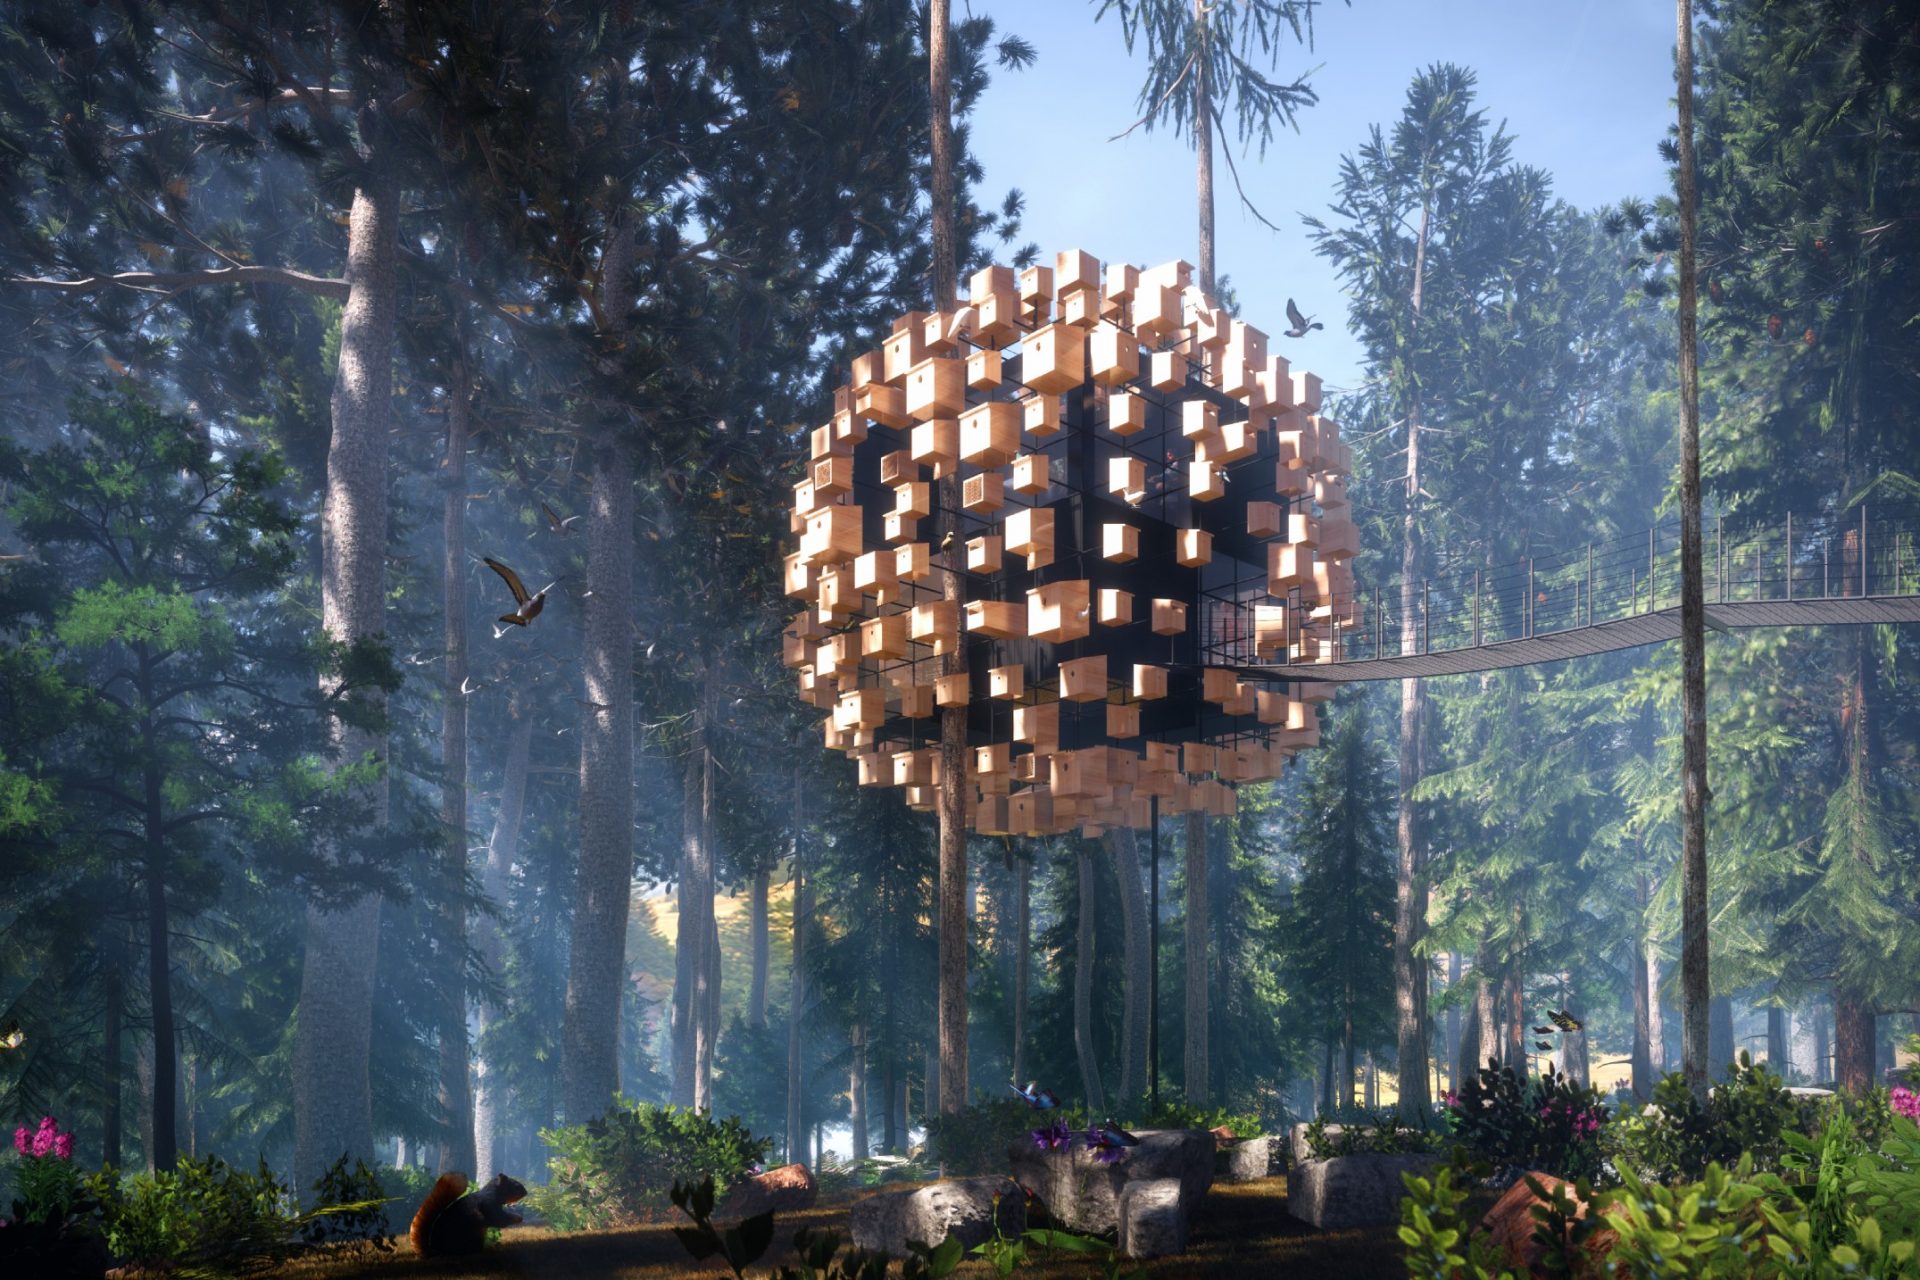 Biosphere Treehotel cabin with birdboxes by BIG architect studio